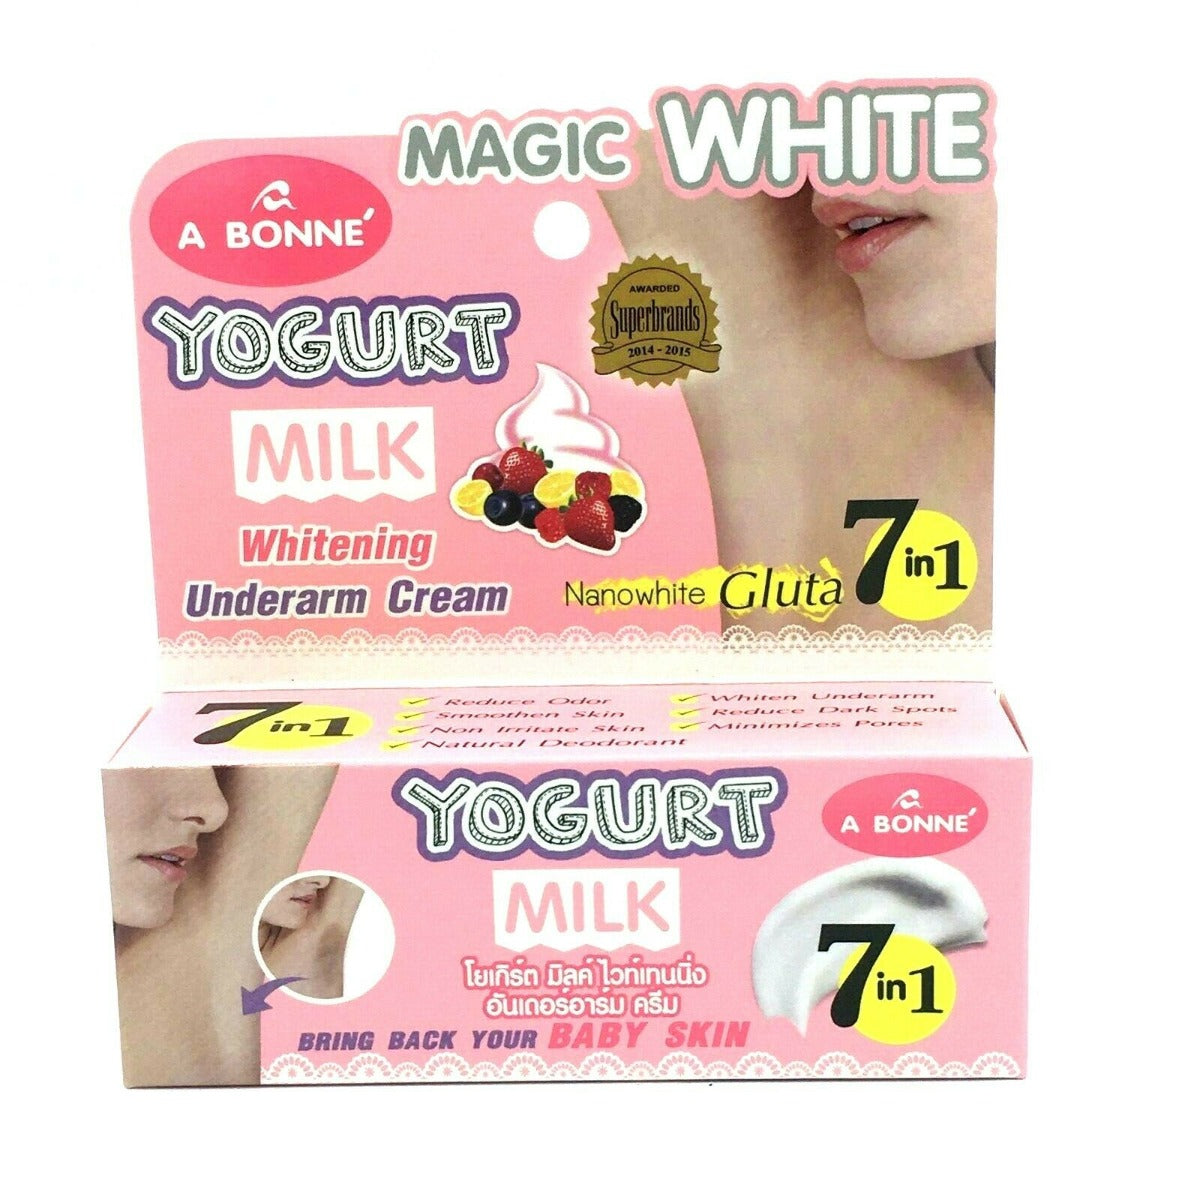 A Bonne Magic White Yogurt Milk Whitening Underarm Cream, 30g